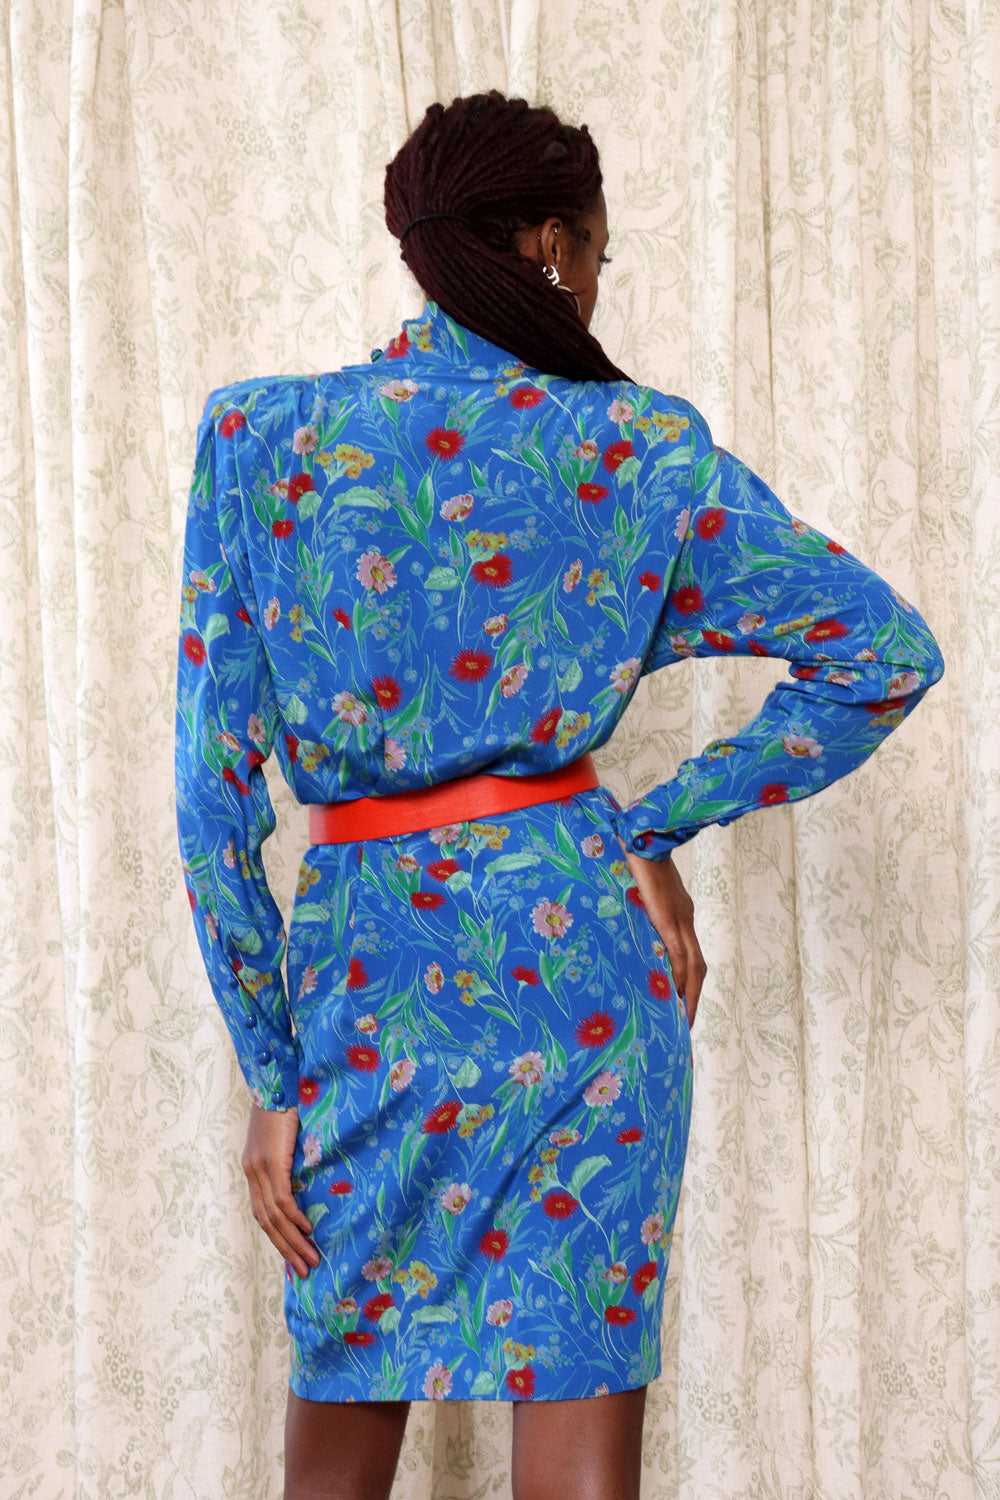 Ungaro Wildflower Silk Dress S/M - image 4